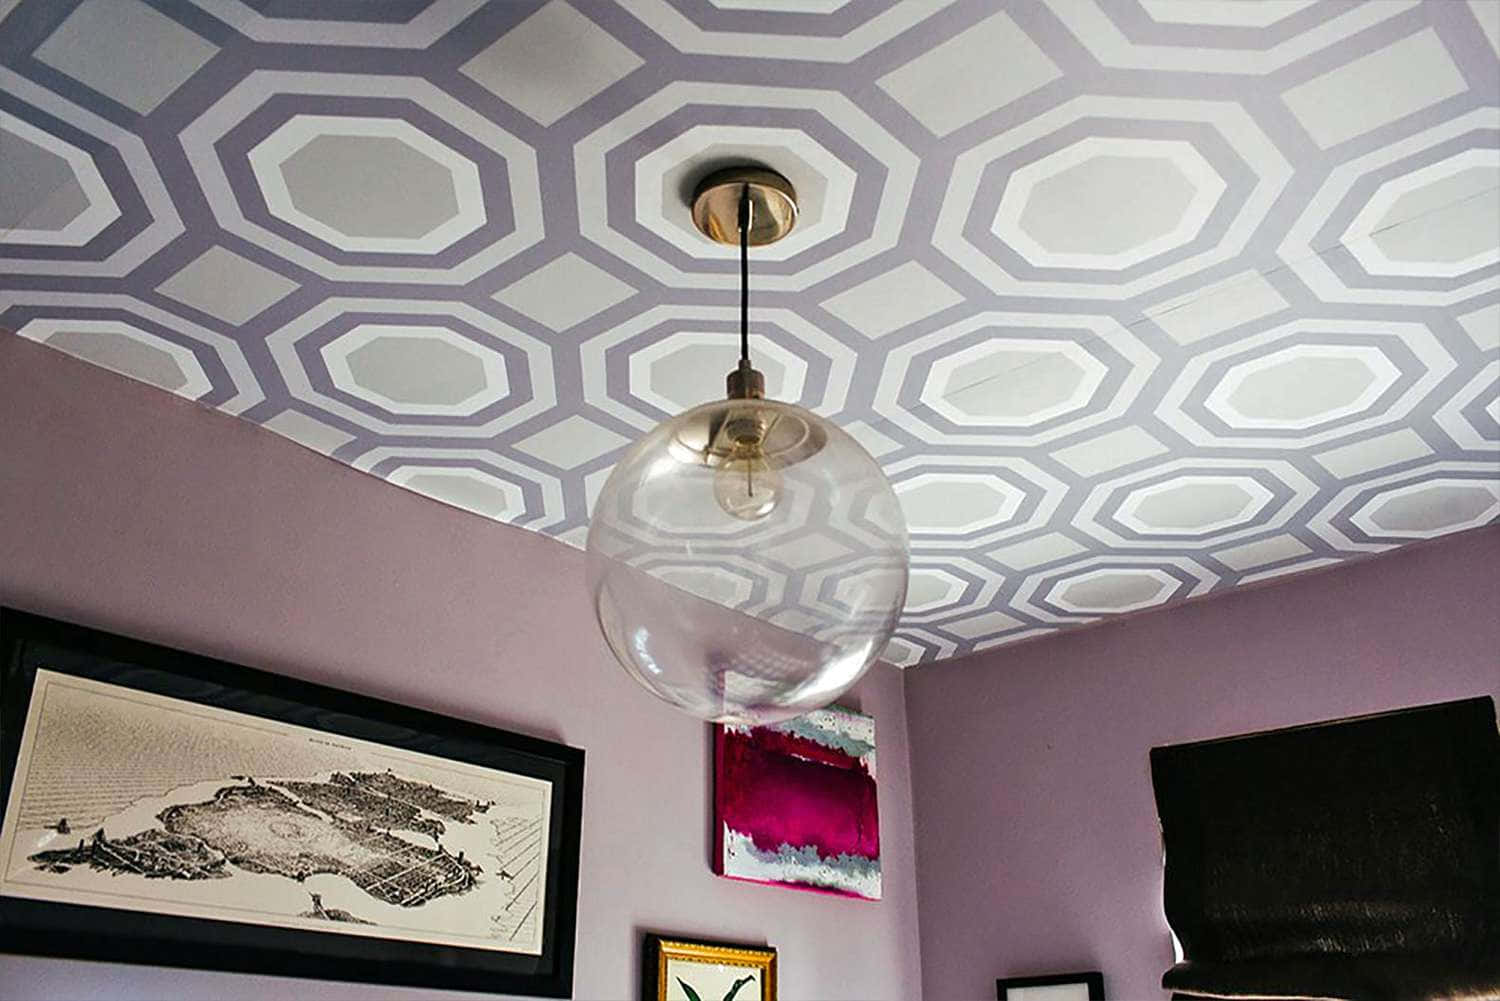 Caption: Elegant Pendant Light Fixture Illuminating The Room Wallpaper